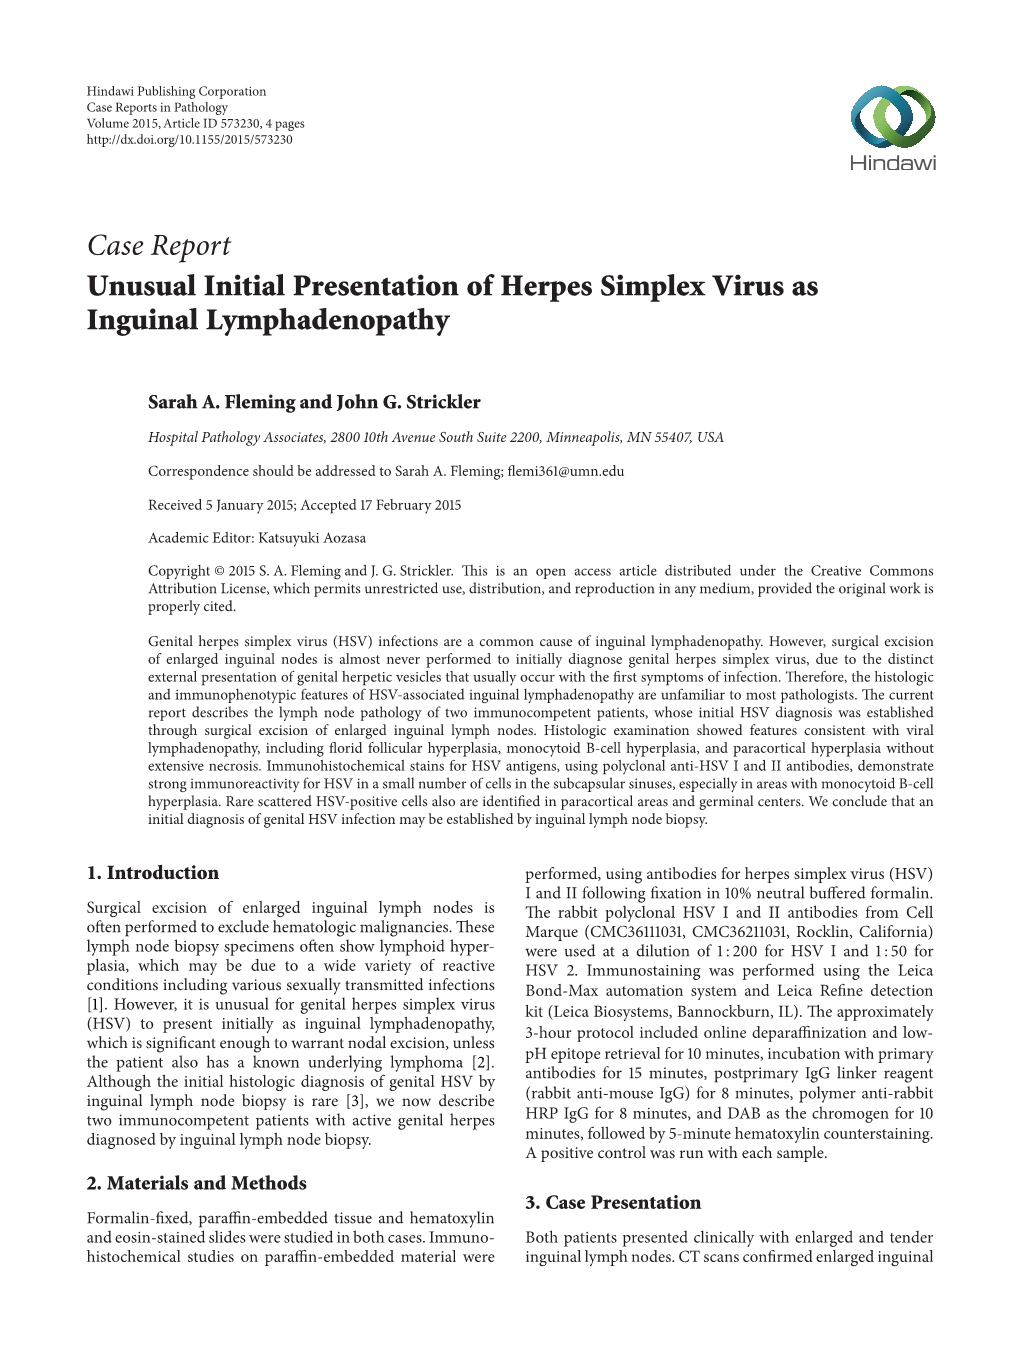 Case Report Unusual Initial Presentation of Herpes Simplex Virus As Inguinal Lymphadenopathy